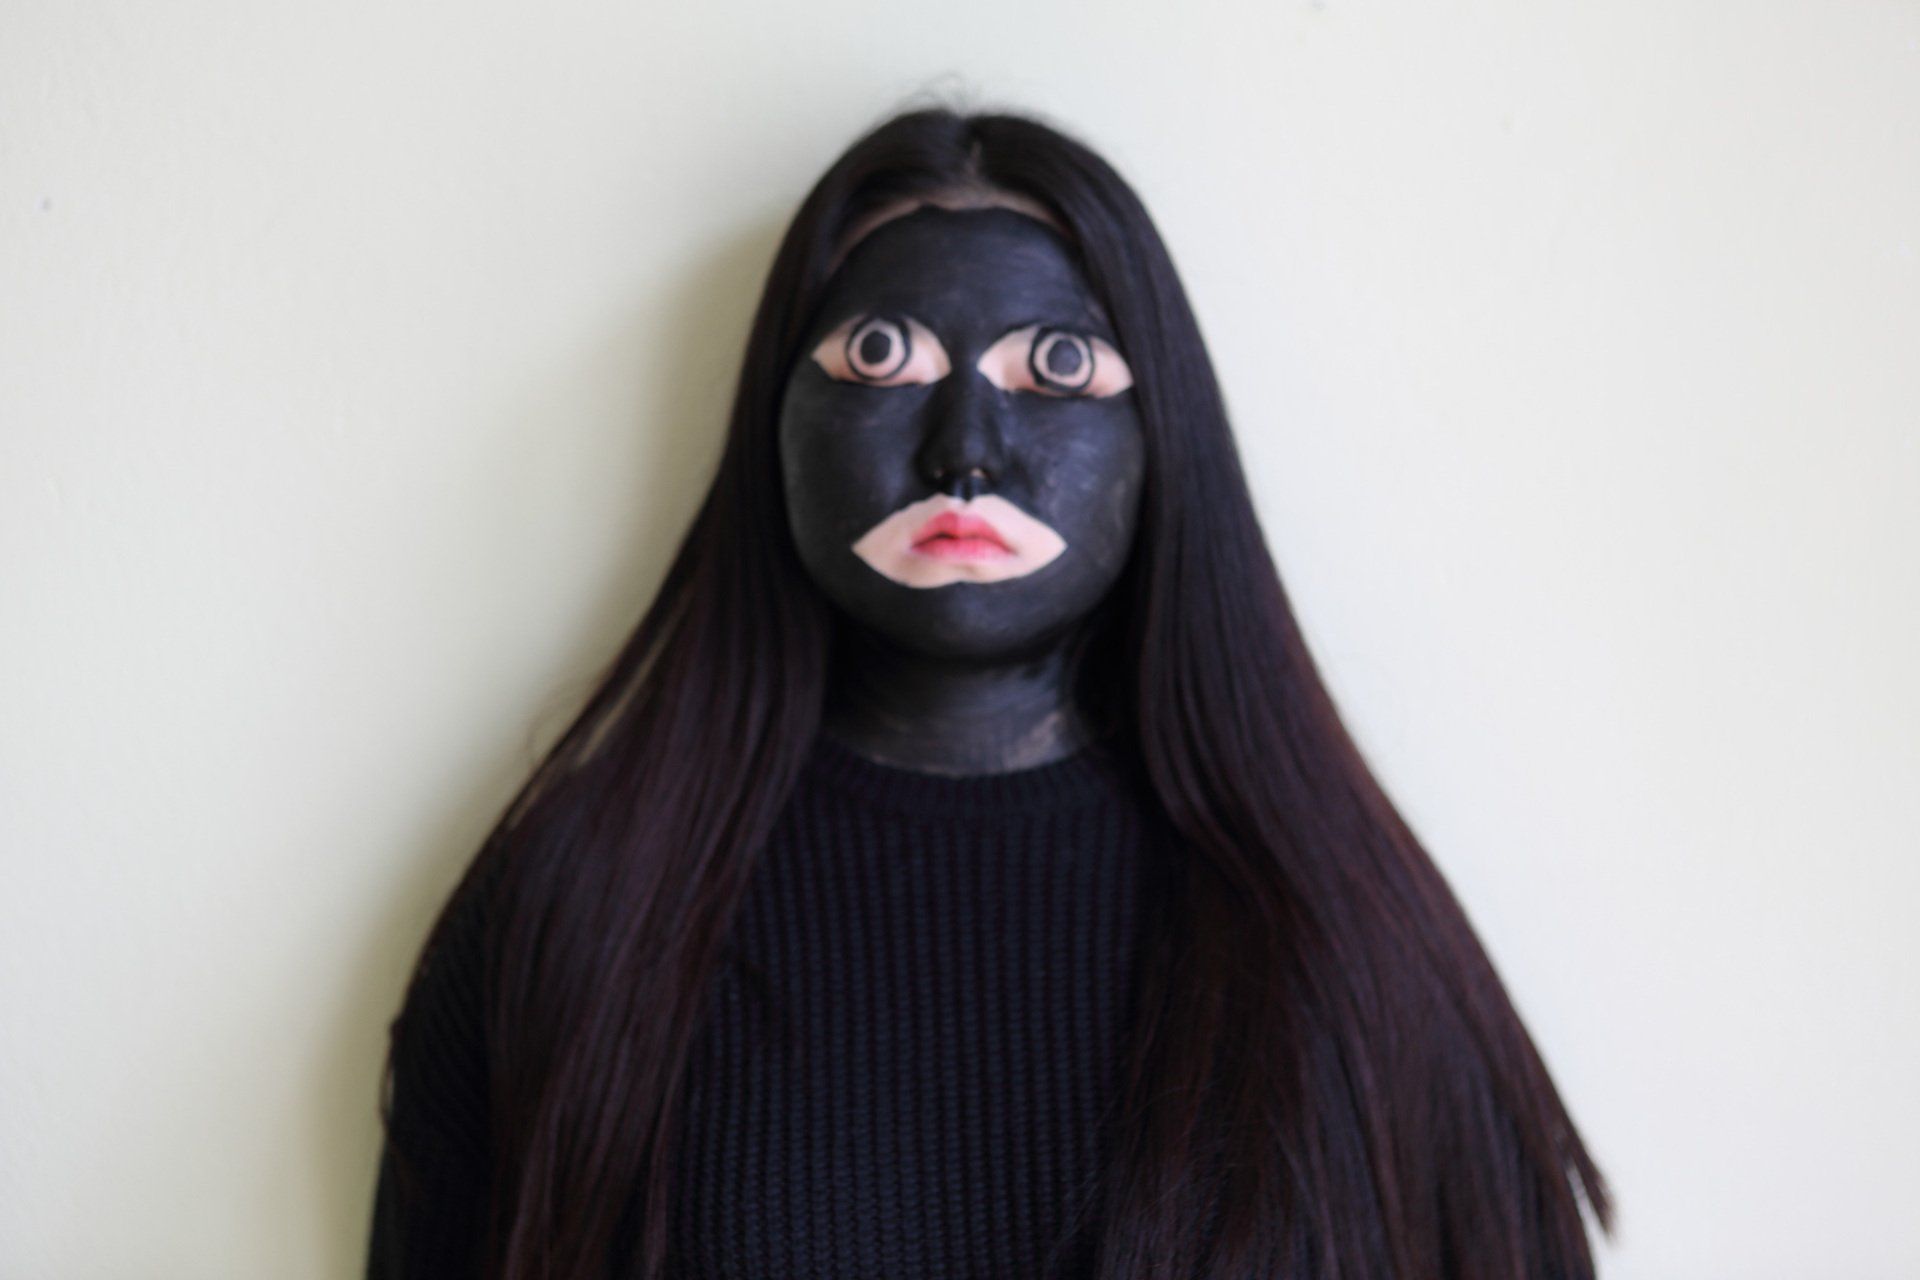 „The Mask No. 2“ by Sebastian Bieniek (B1EN1EK), 2015. Edition of 9 original photographs. 67 cm. x 100 cm. From „The Mask“ series. Oeuvre of BieniekFace (Bieniek-Face).